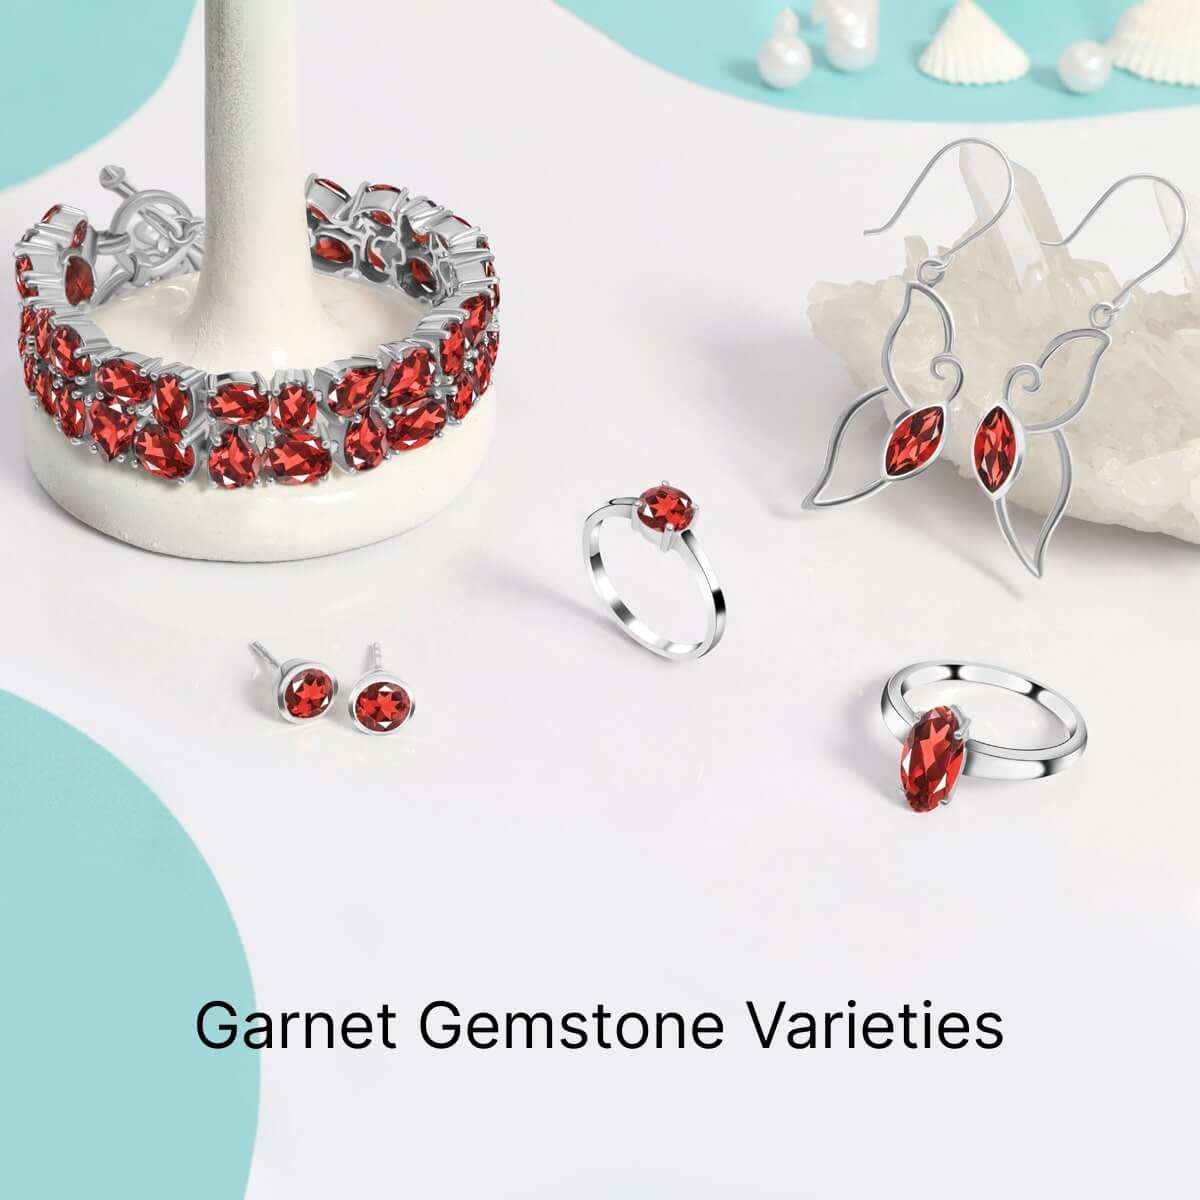 Types of Garnet